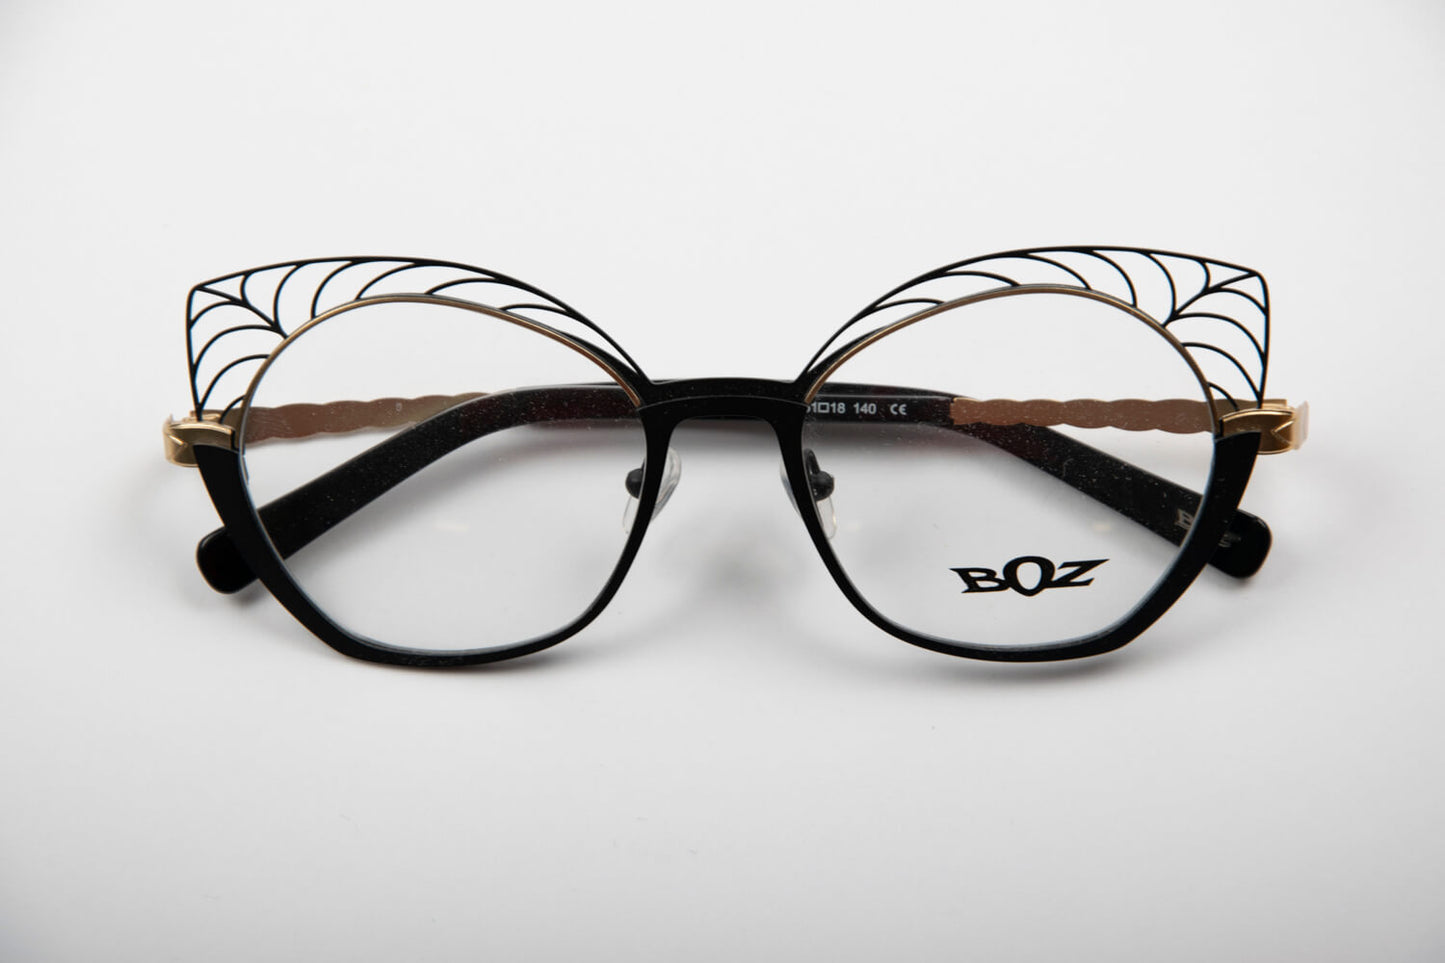 Boz Eyewear | Hipe | Nero e Oro - OTTICA SICOLI